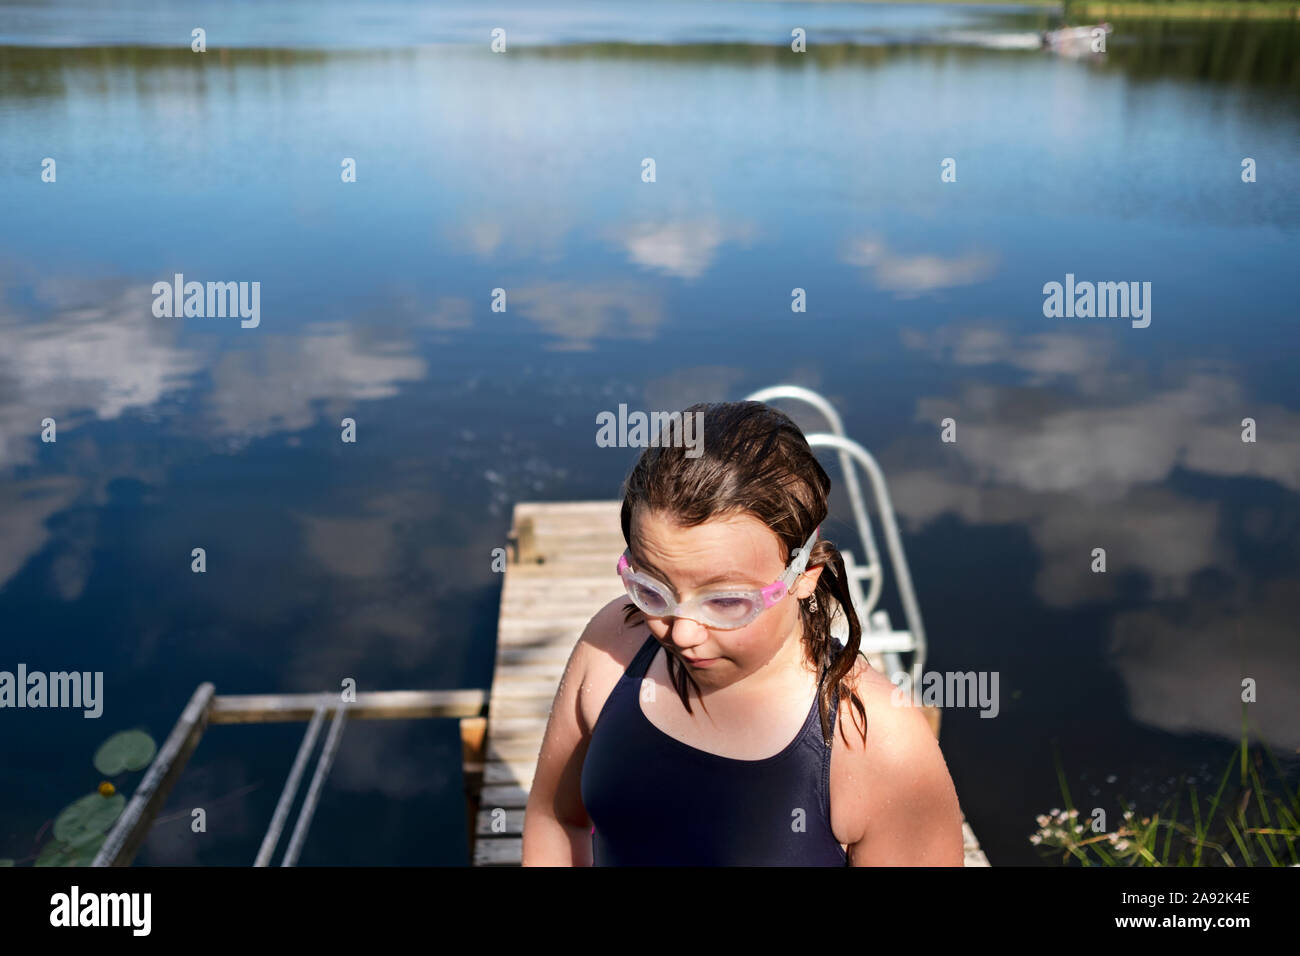 Girl on jetty Stock Photo